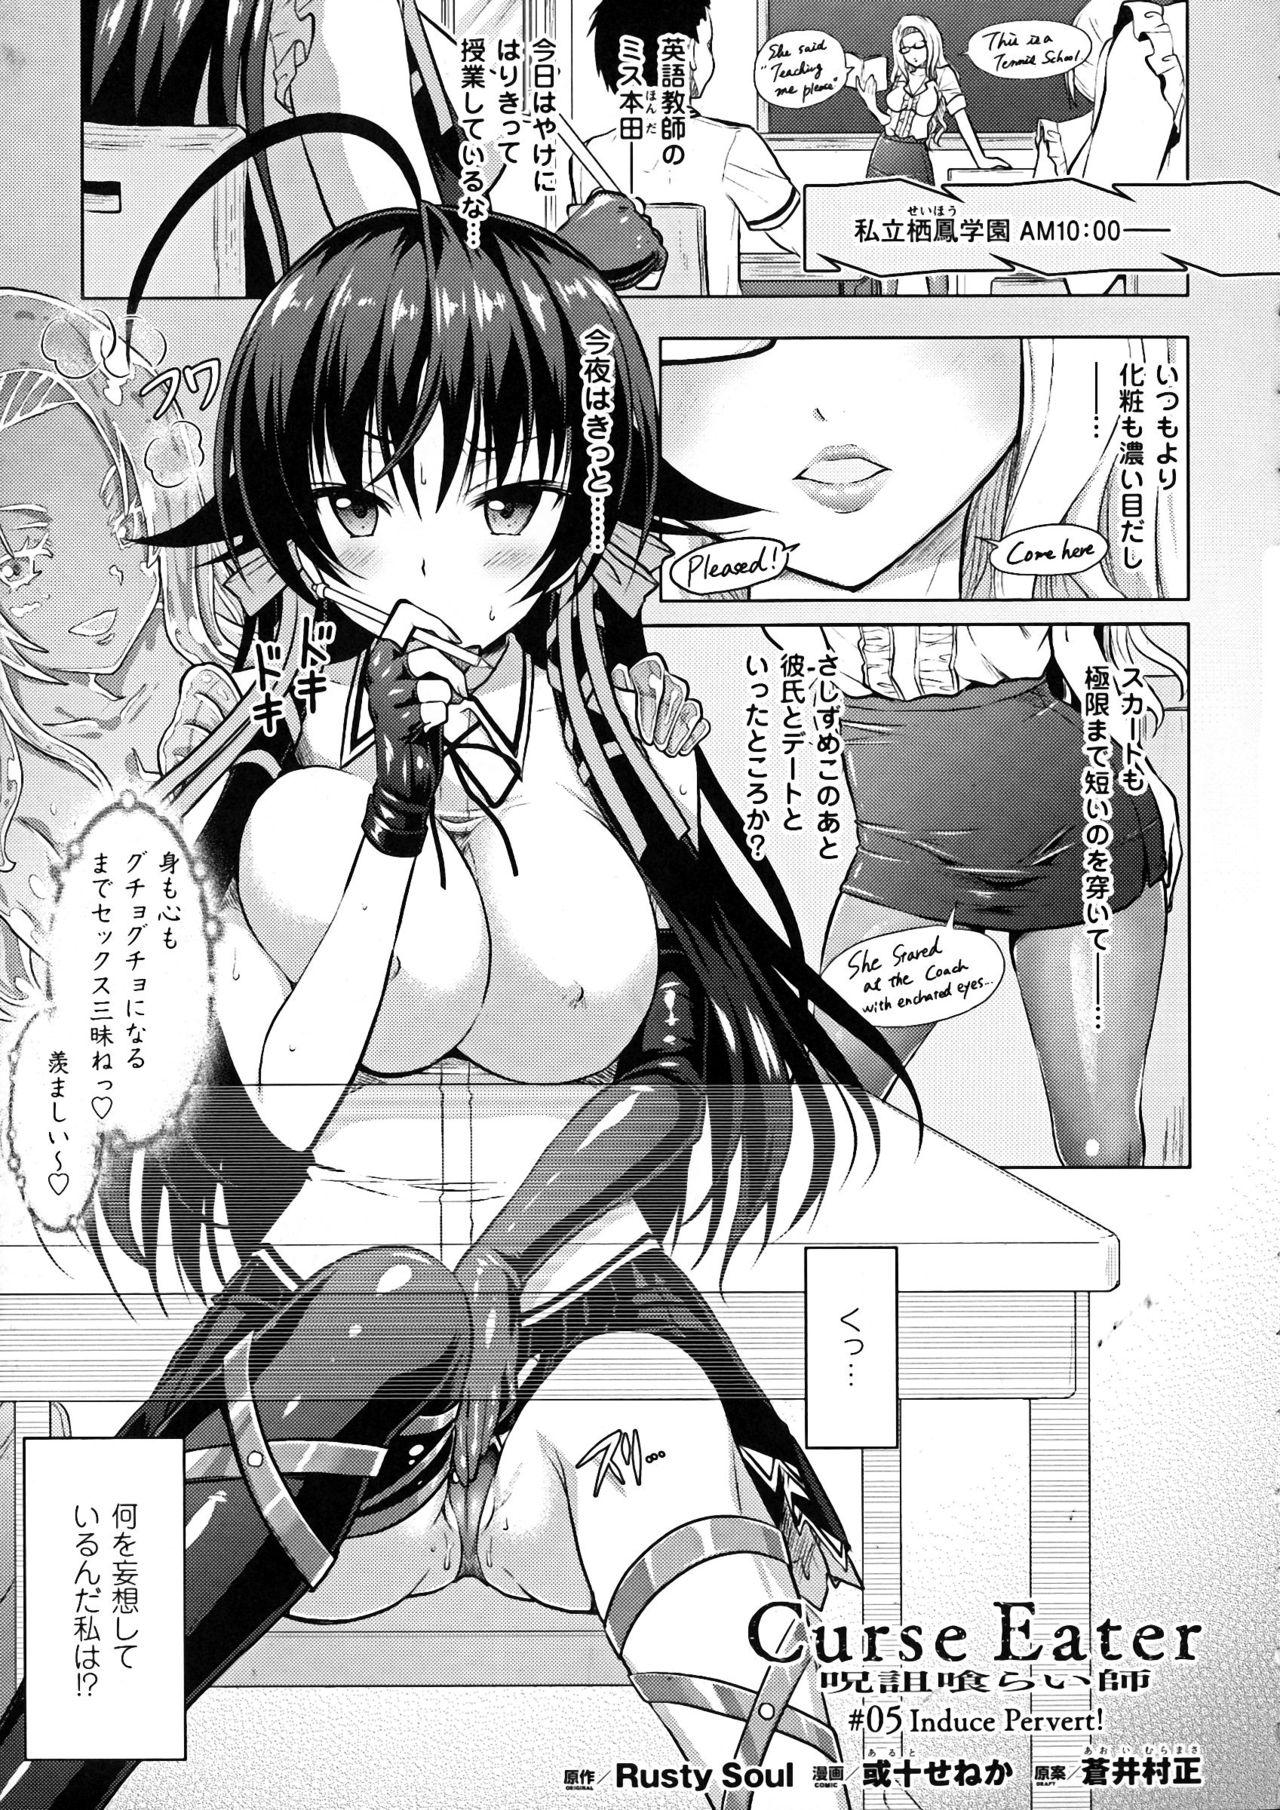 Seigi no Heroine Kangoku File DX vol. 6 22